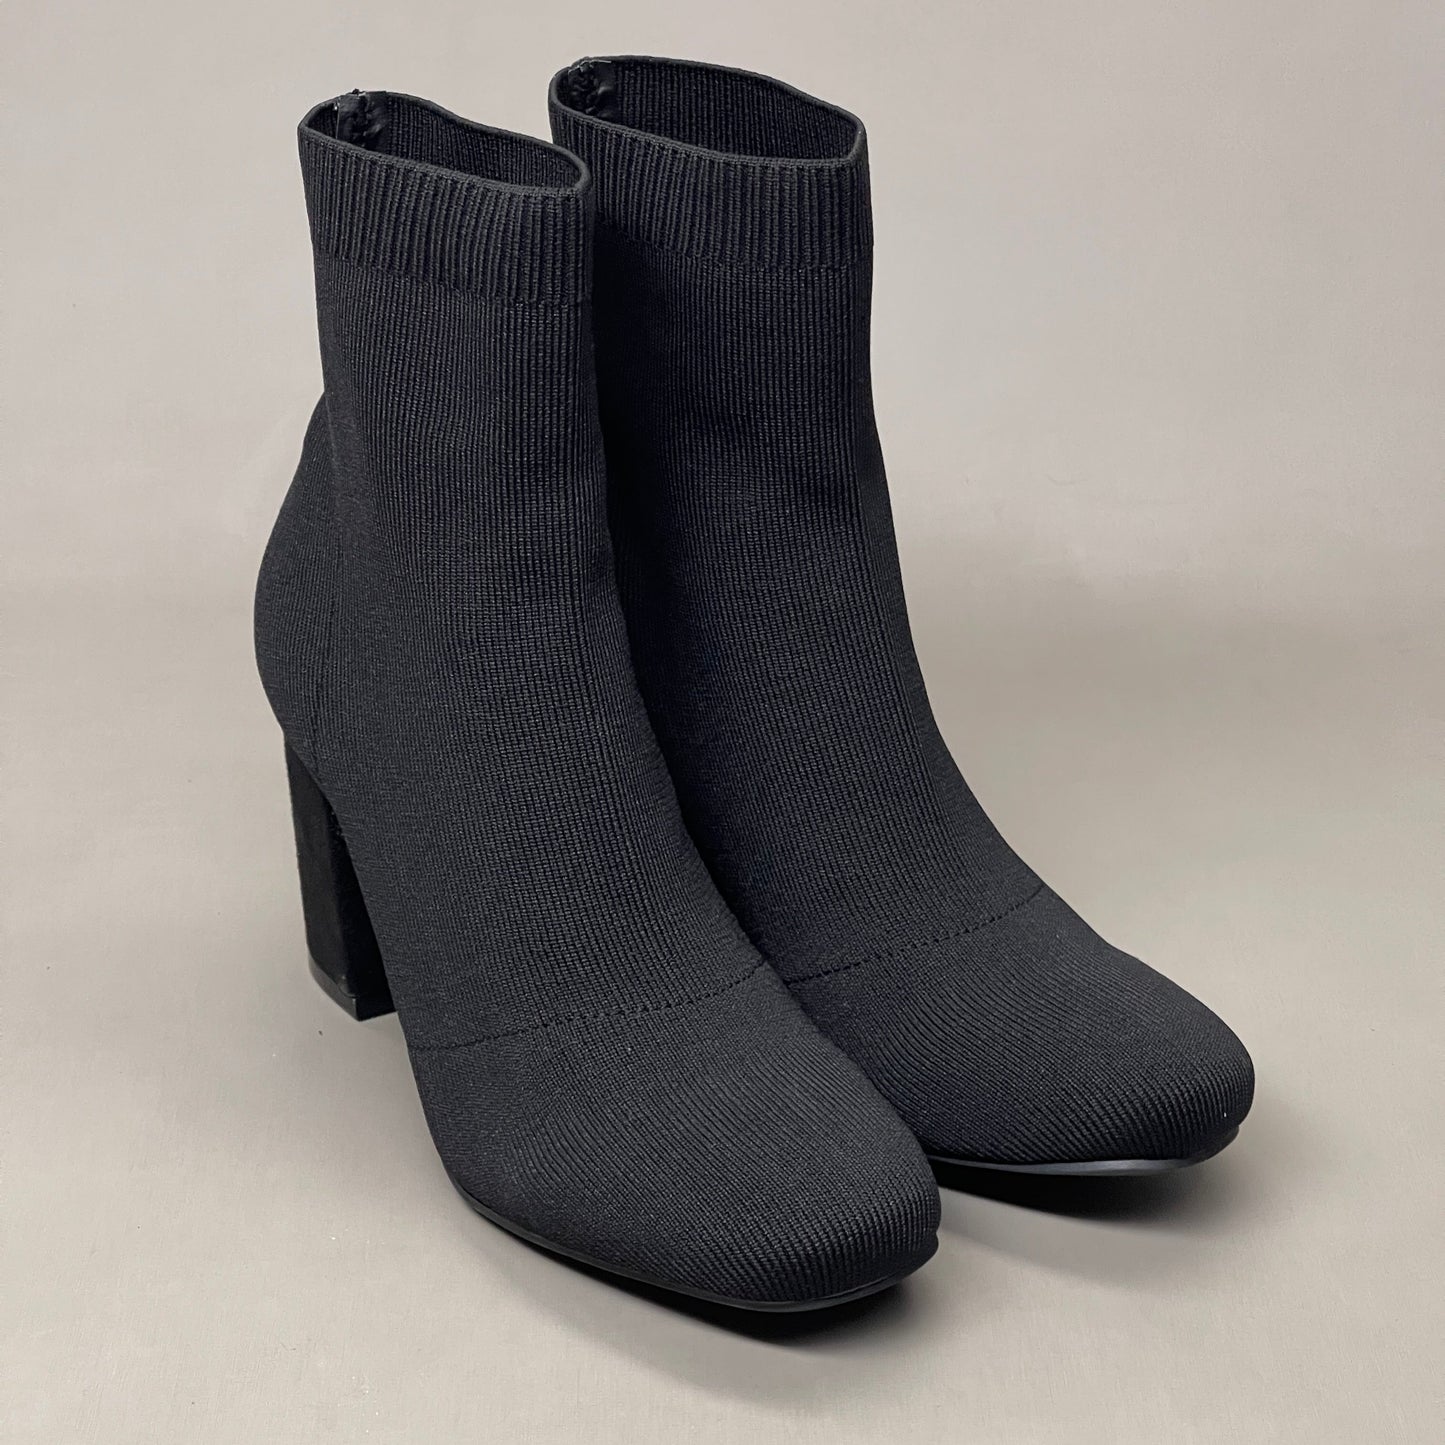 MIA Erika Fly Knit Booties Dress Boots Black 2” Heel Sz 9.5 GS7553115Y (New)